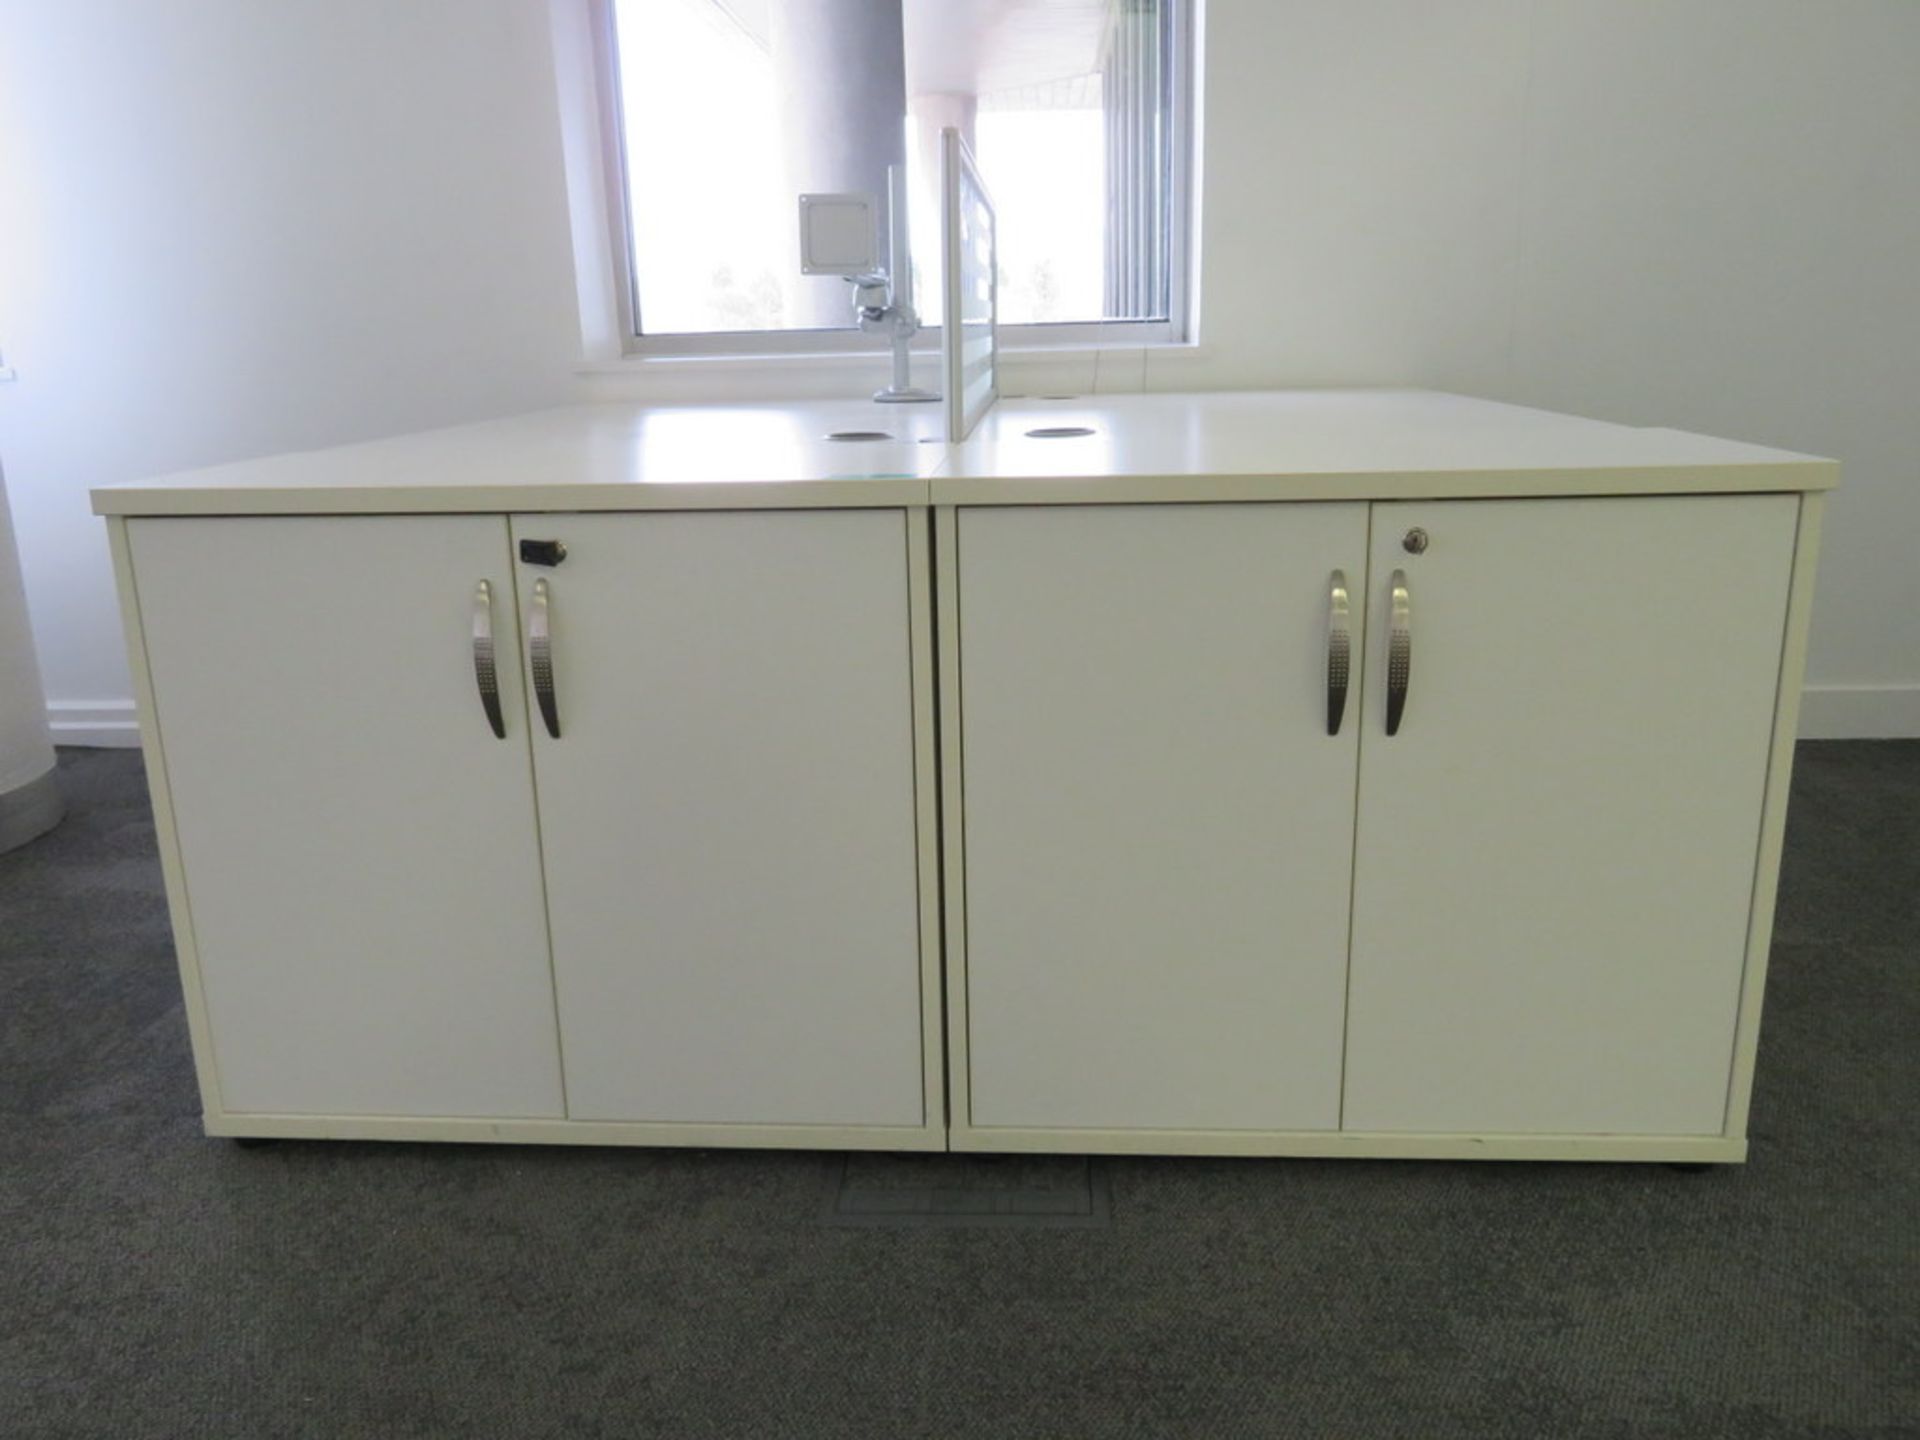 2 Person Desk Arrangement With Divider & Storage Cupboards. - Image 2 of 3